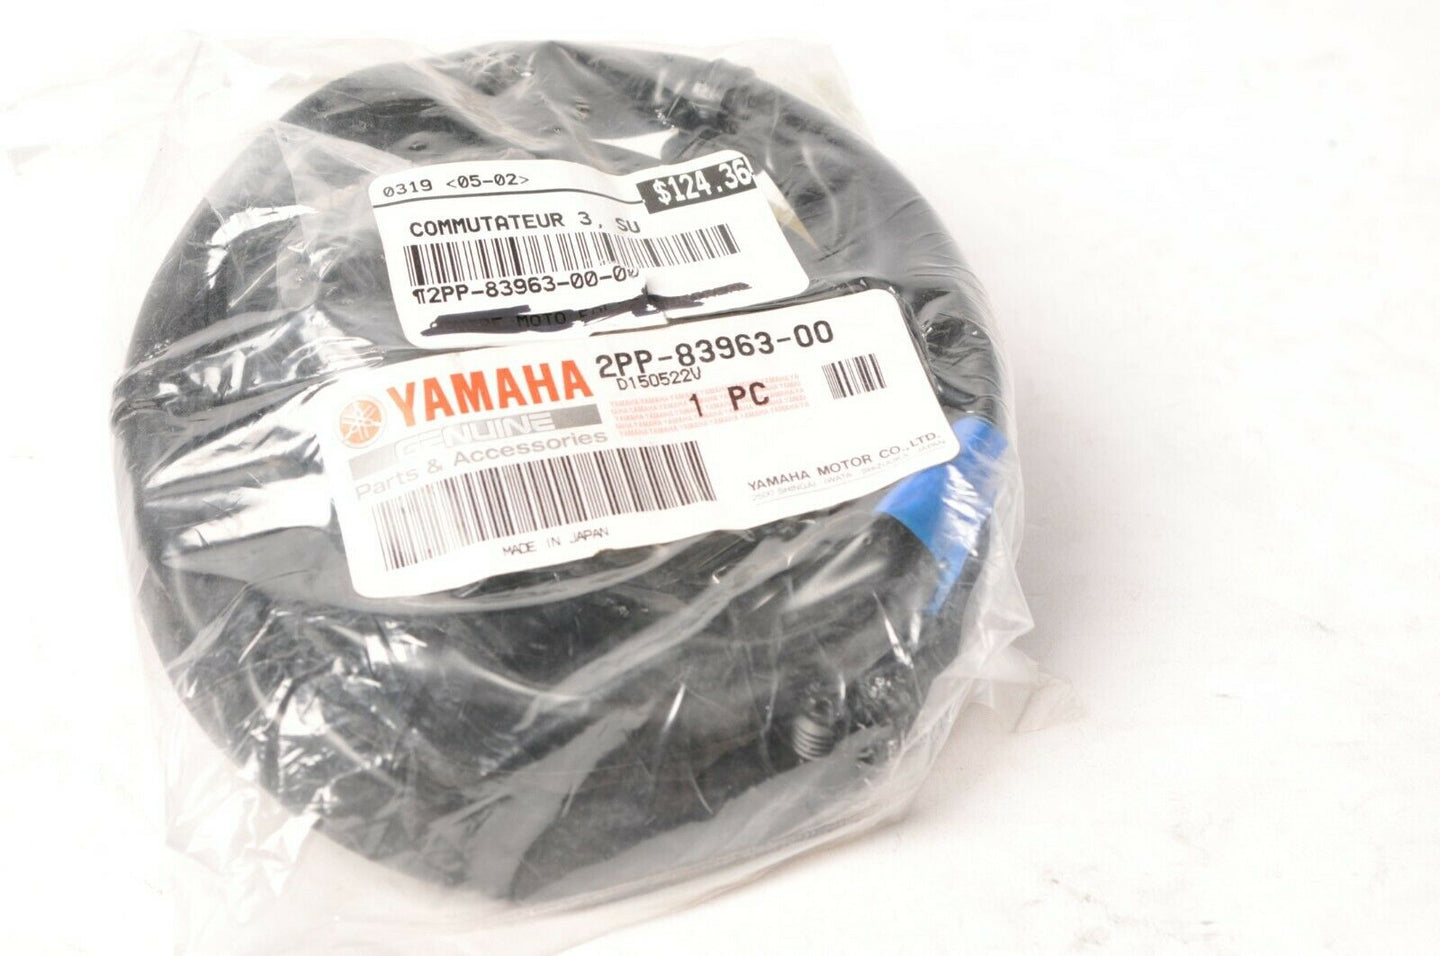 Genuine Yamaha 2PP-83963-00 Switch, Right- Stop/Start/Run/Mode - FJ09 MT09